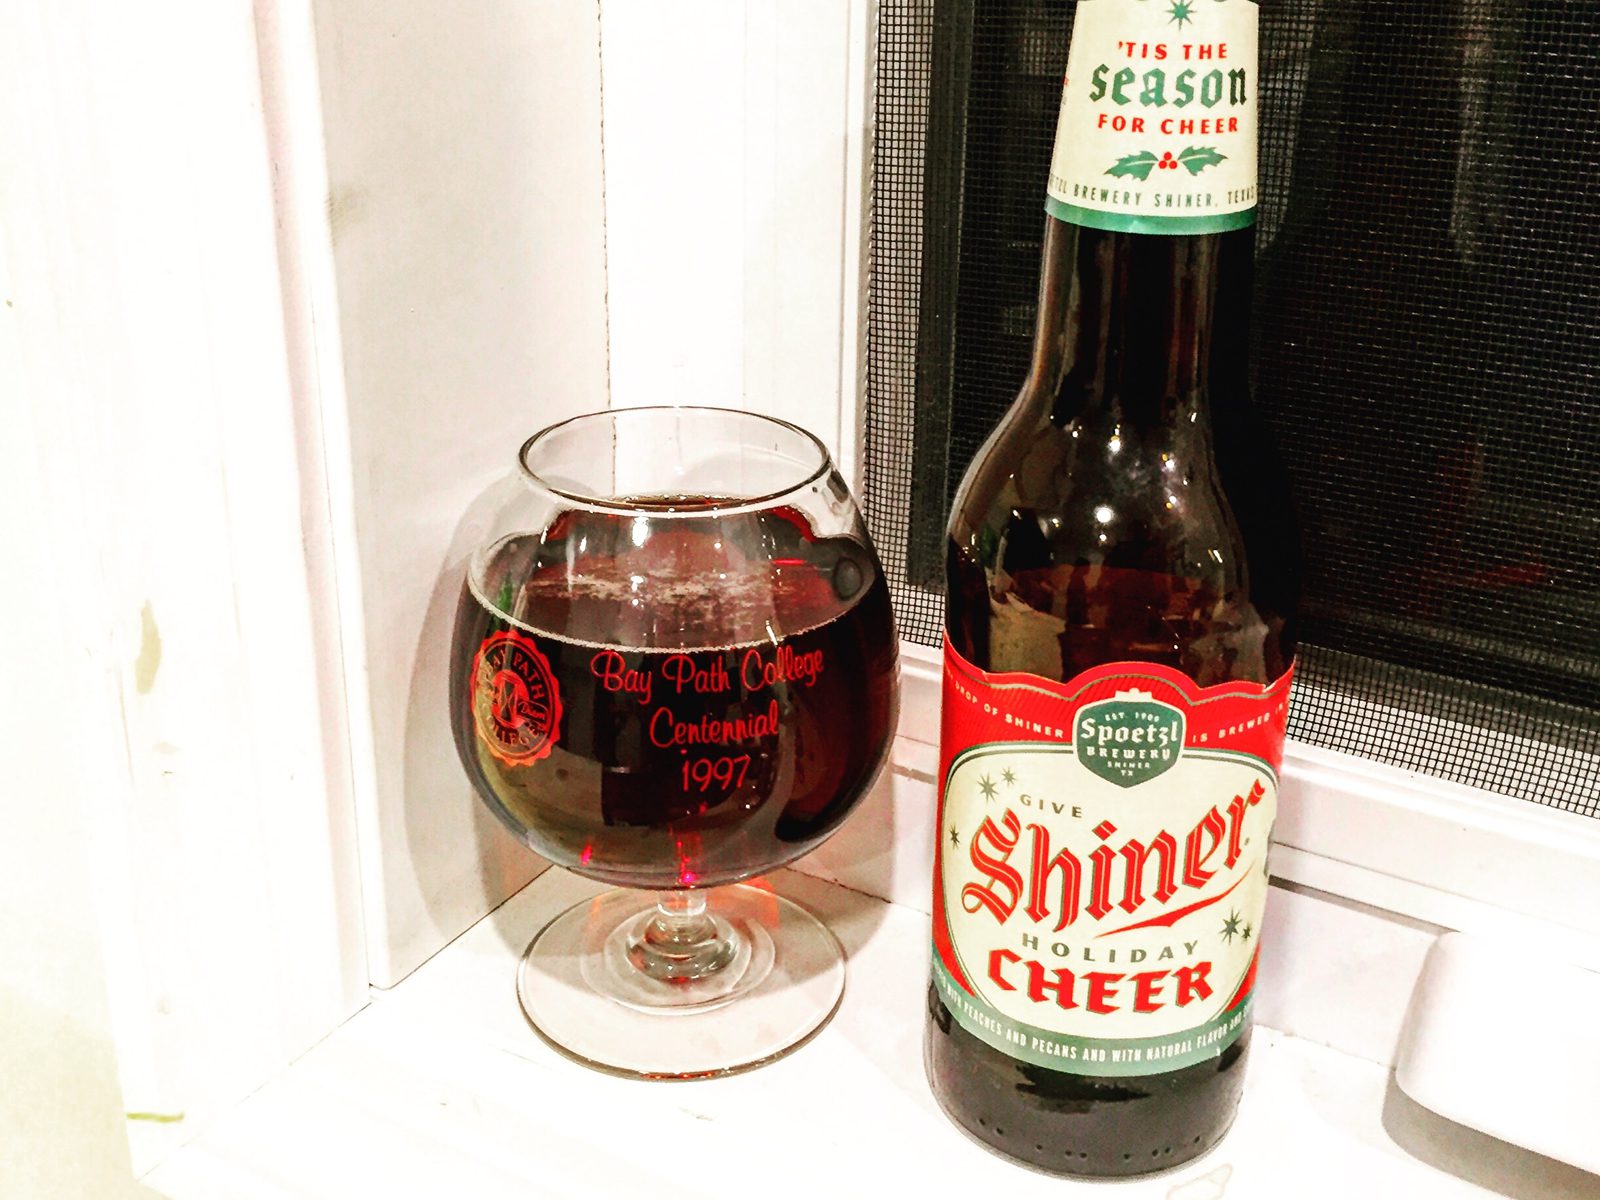 Spoetzl Brewery: Shiner Holiday Cheer